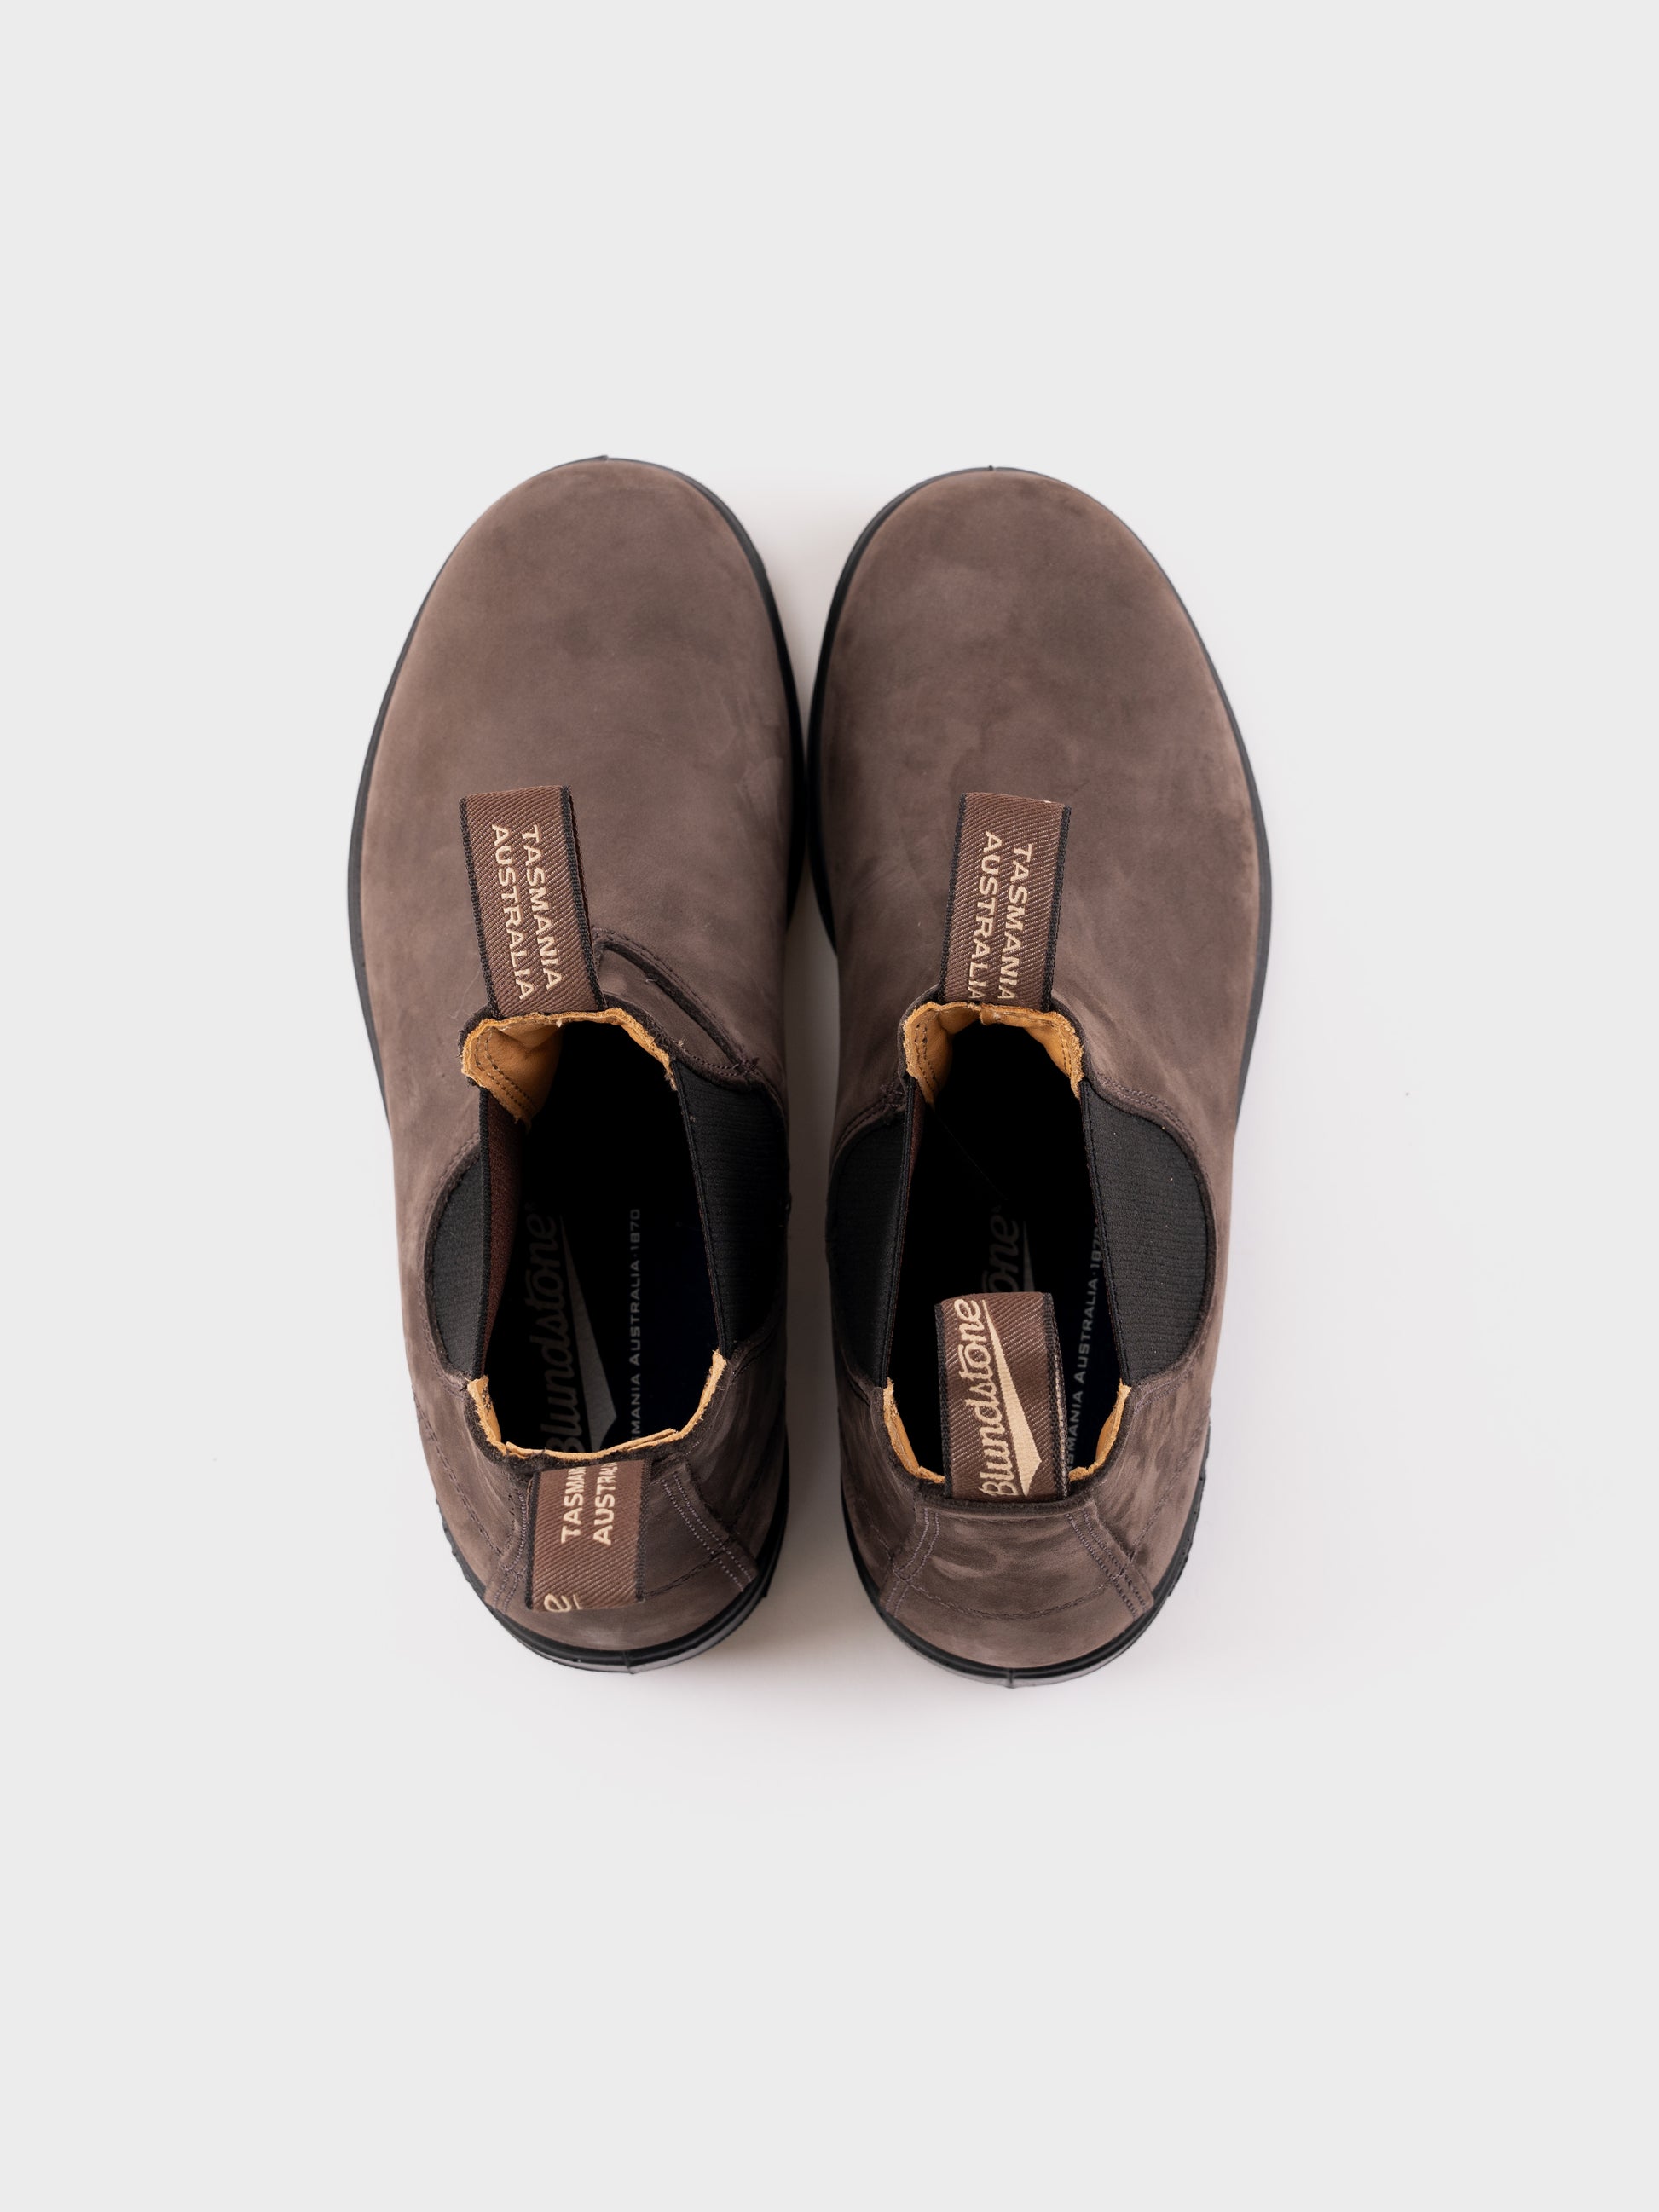 Blundstone Boots - 2345 - Brown Nubuck